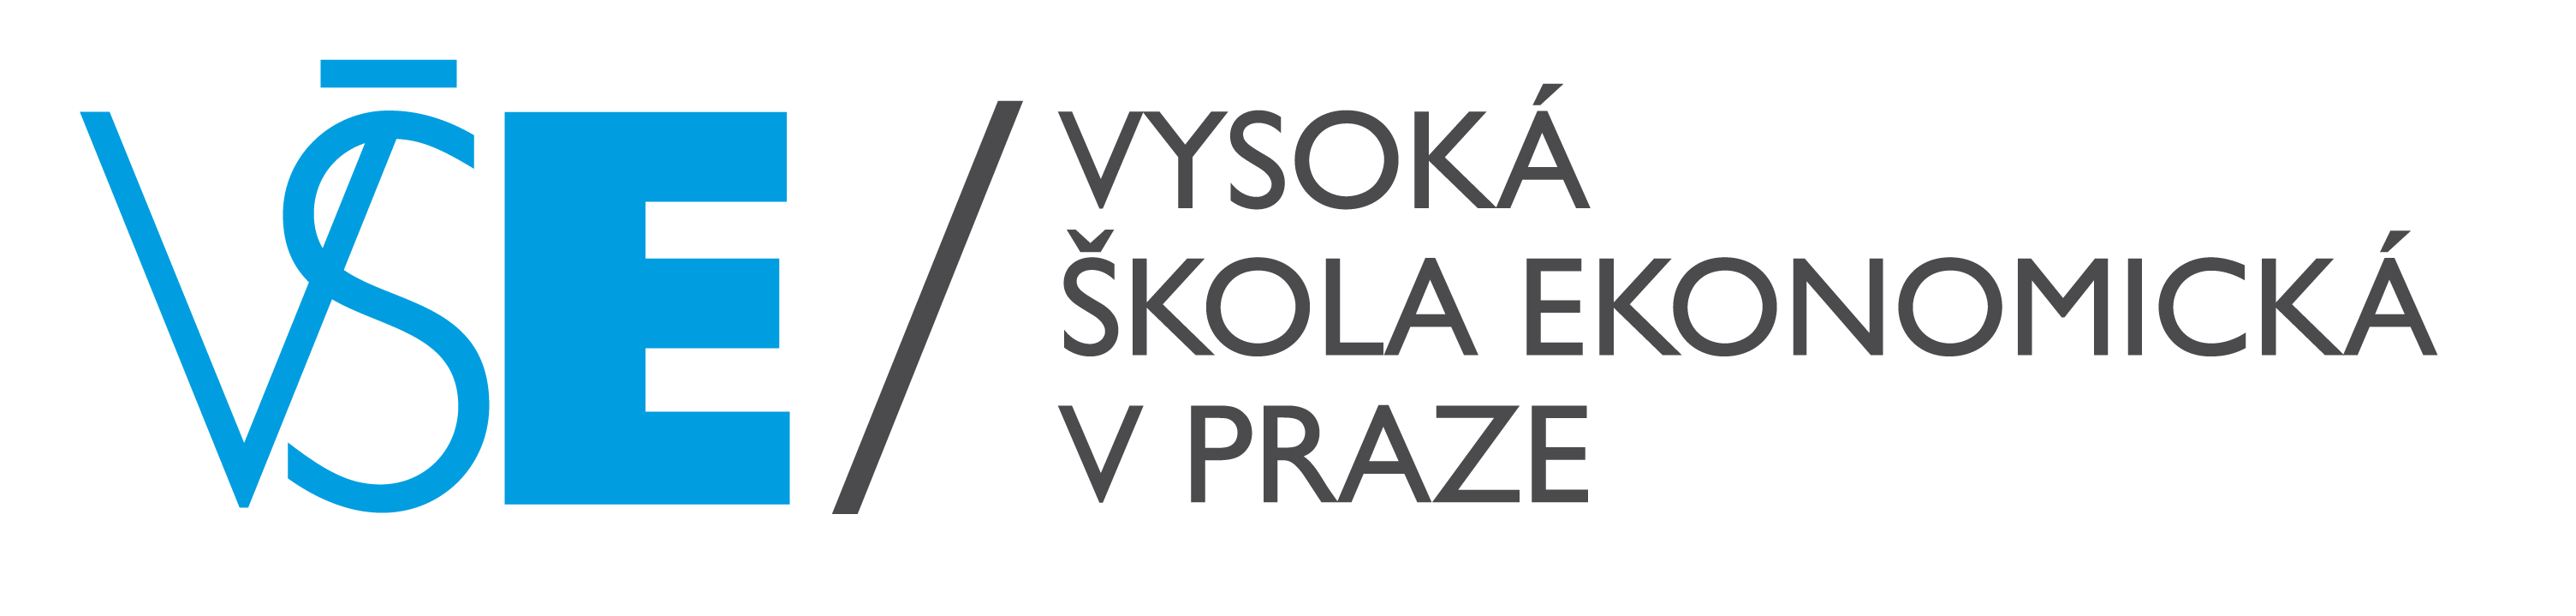 VSE logo CZ